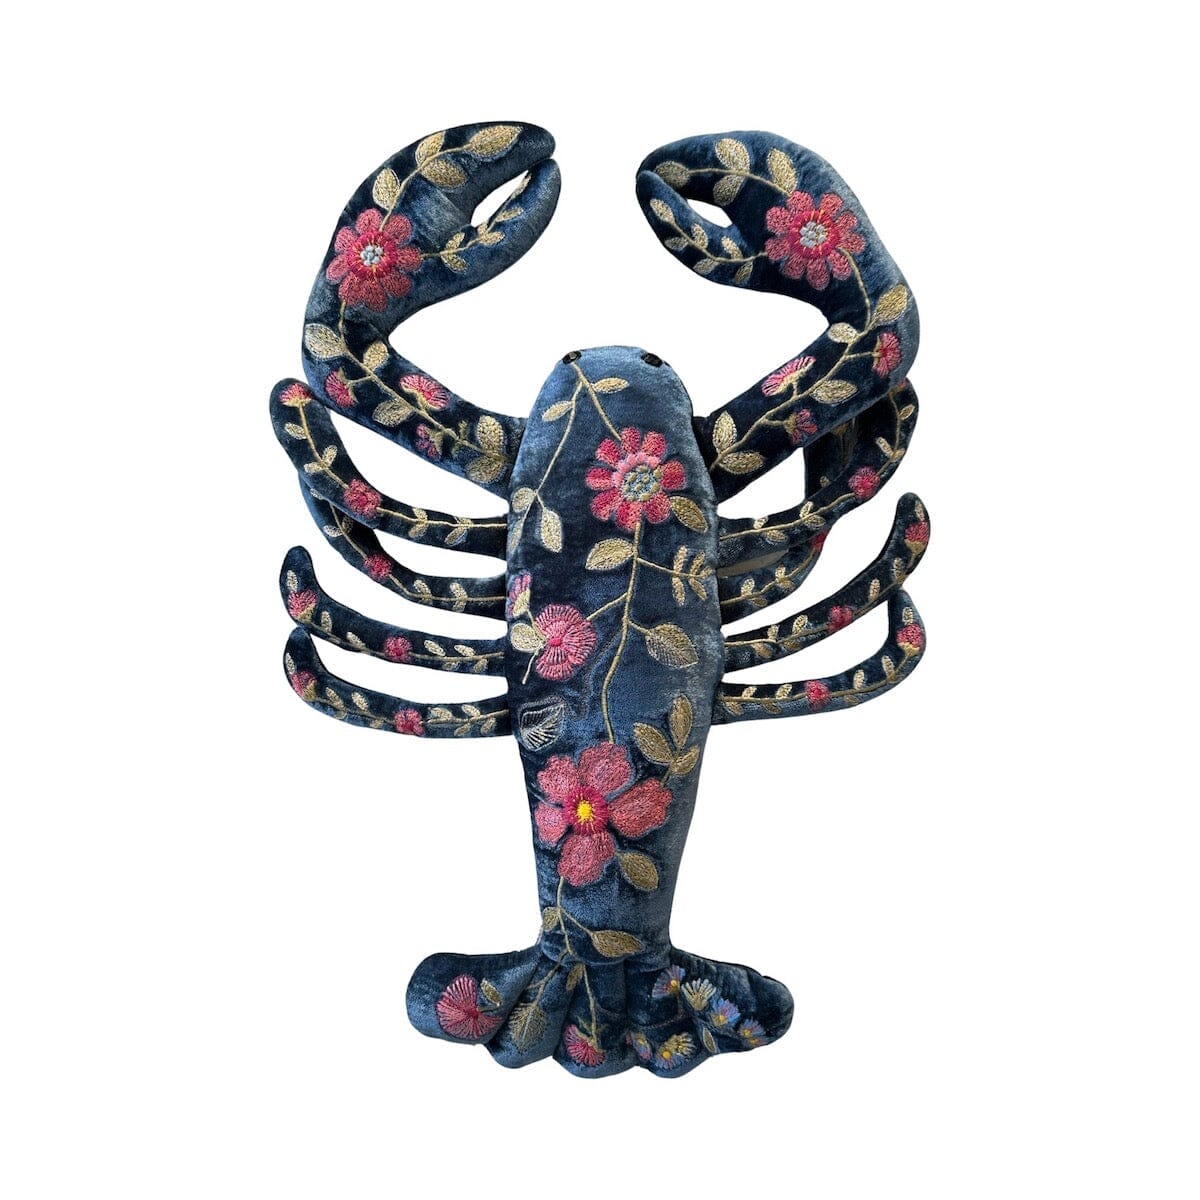 Shaded Indigo Handmade Embroidered Lobster Objet d'Art Anke Drechsel 